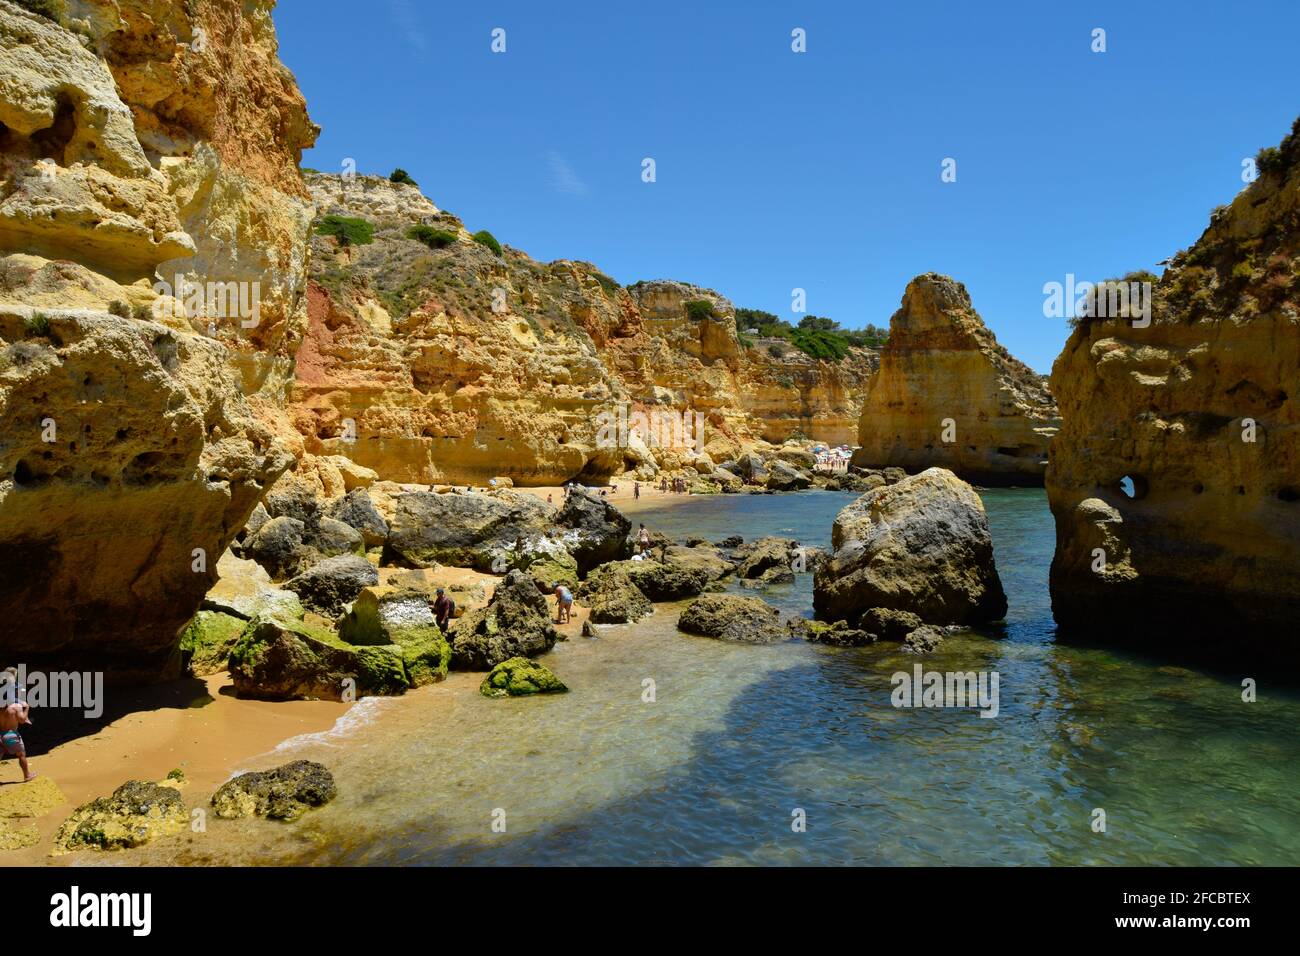 Praia da Marinha, Marinha beach in Algarve Portugal on summer time with beautiful sea and mountains views Stock Photo